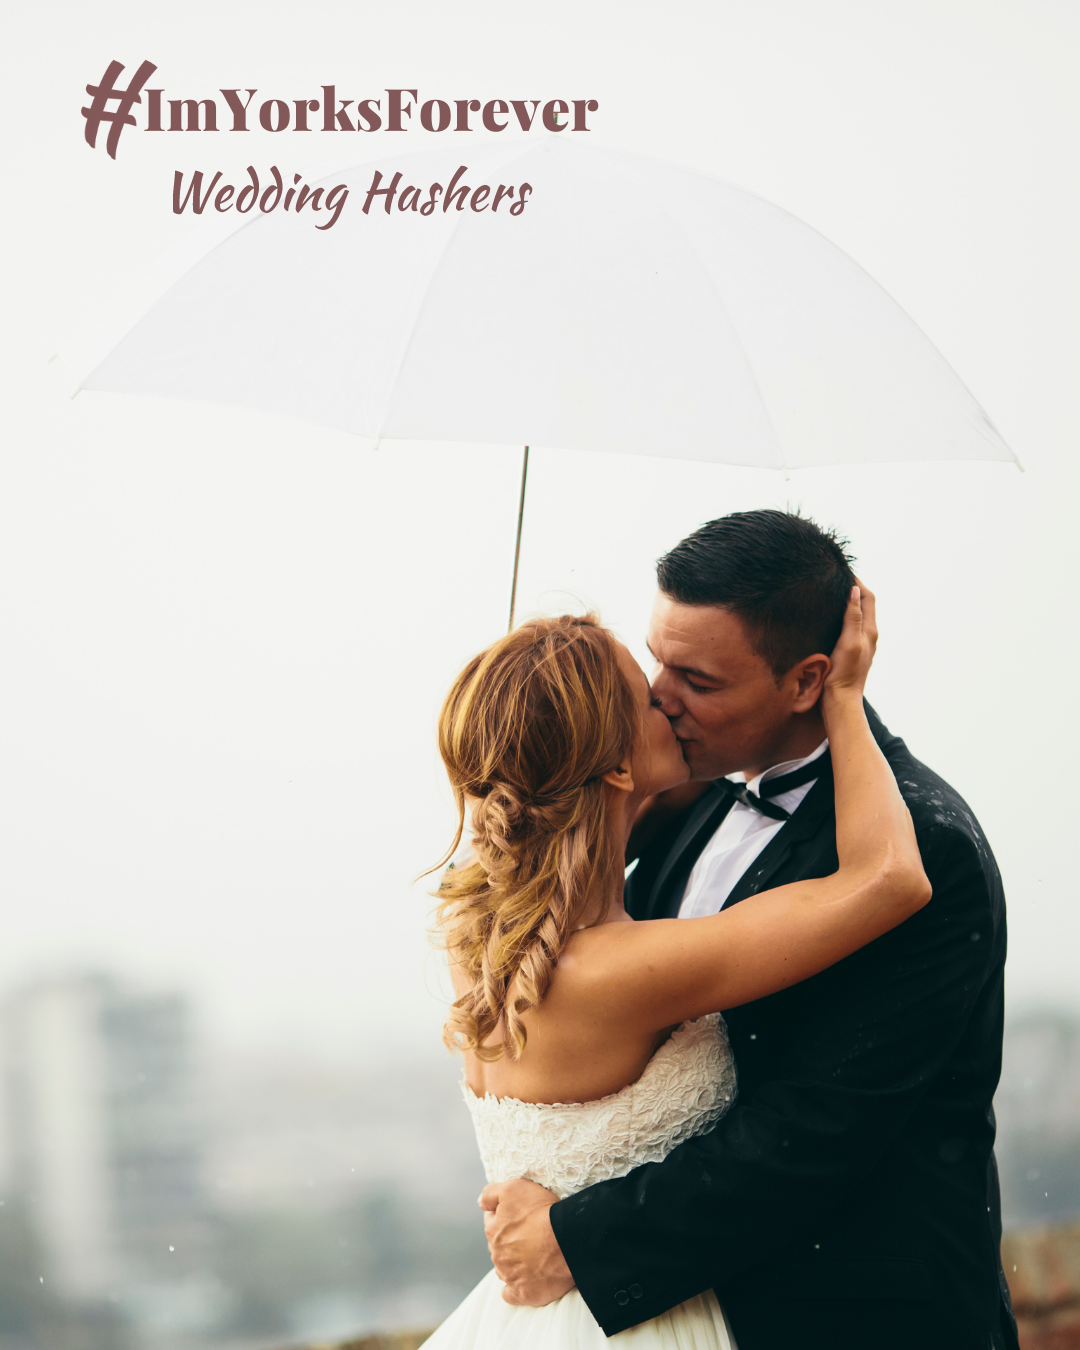 www.santabarbarawedding.com | Wedding Hashers | Custom Wedding Hashtags